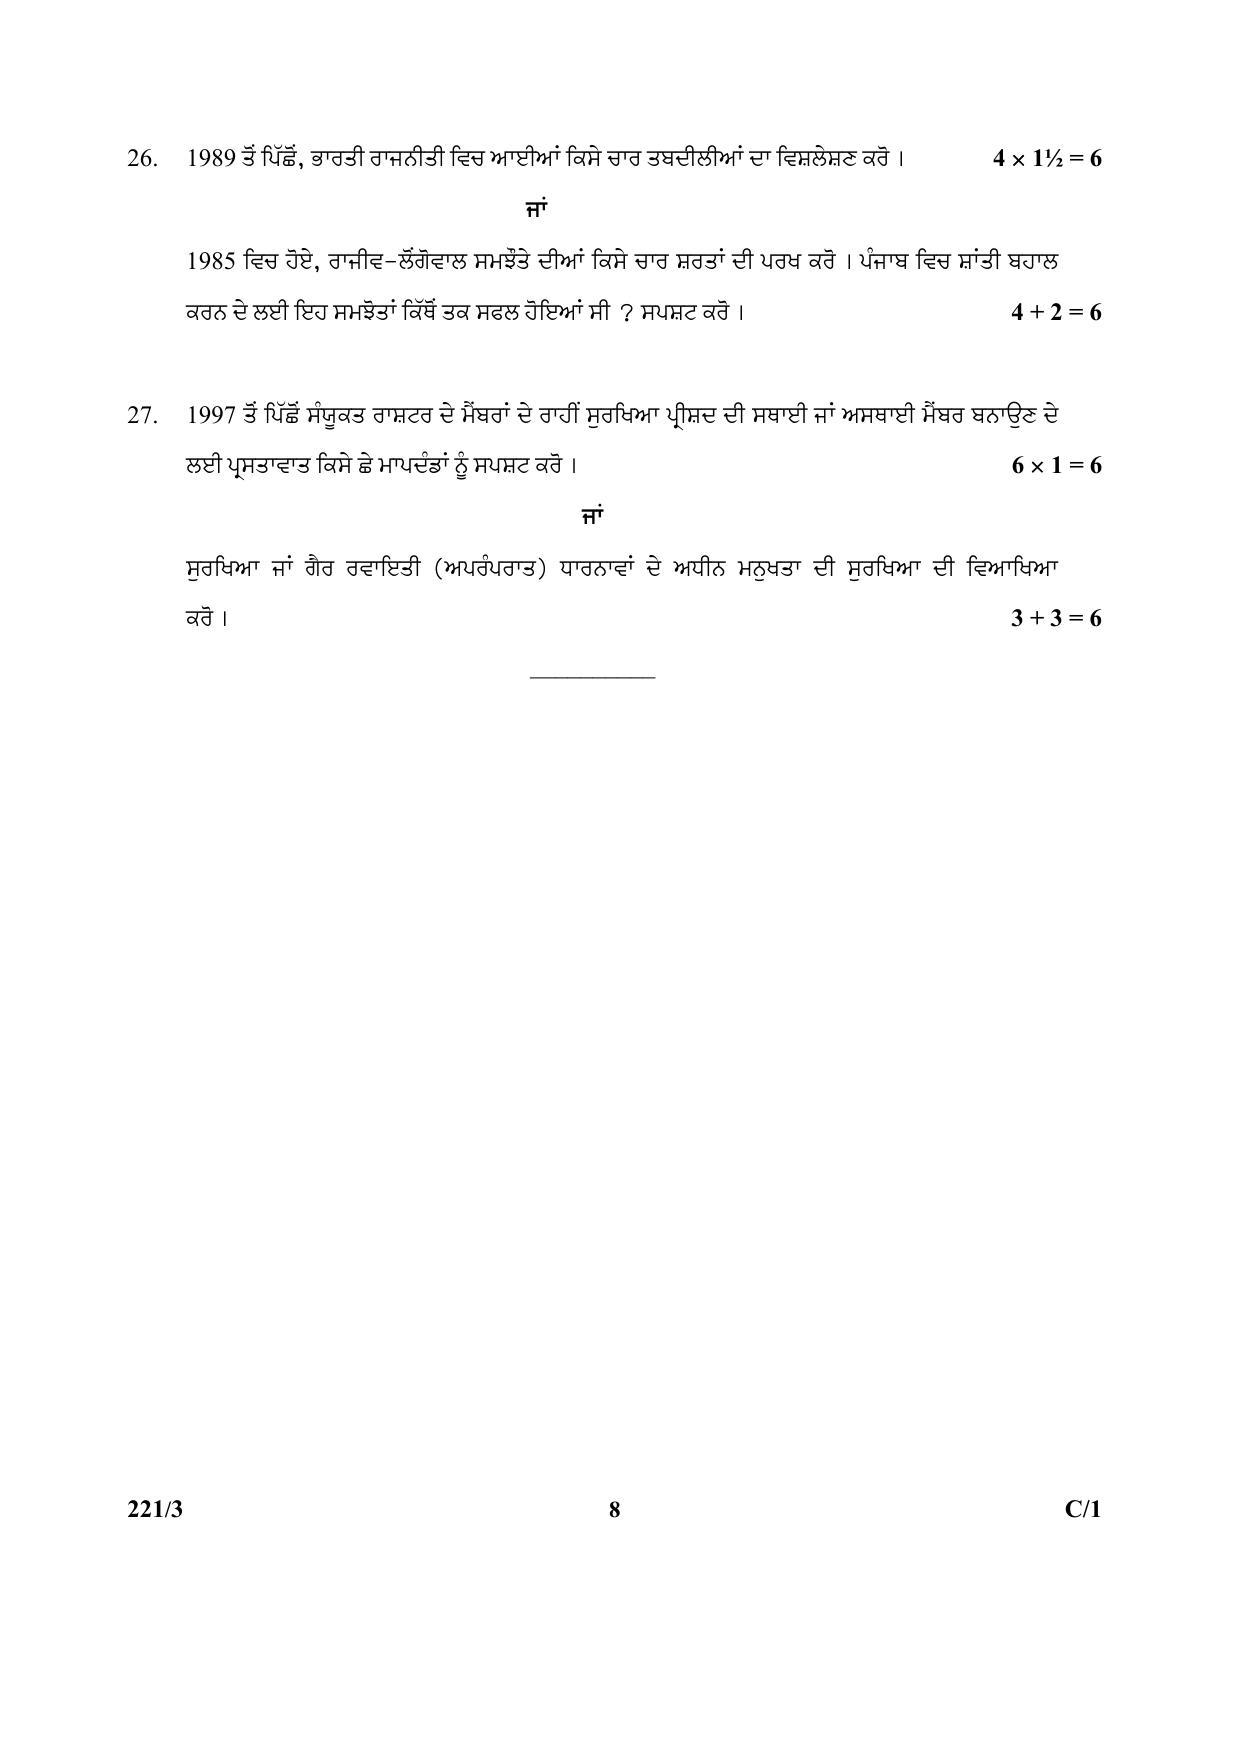 CBSE Class 12 221-3 Political Science_Punjabi 2018 Compartment Question Paper - Page 8